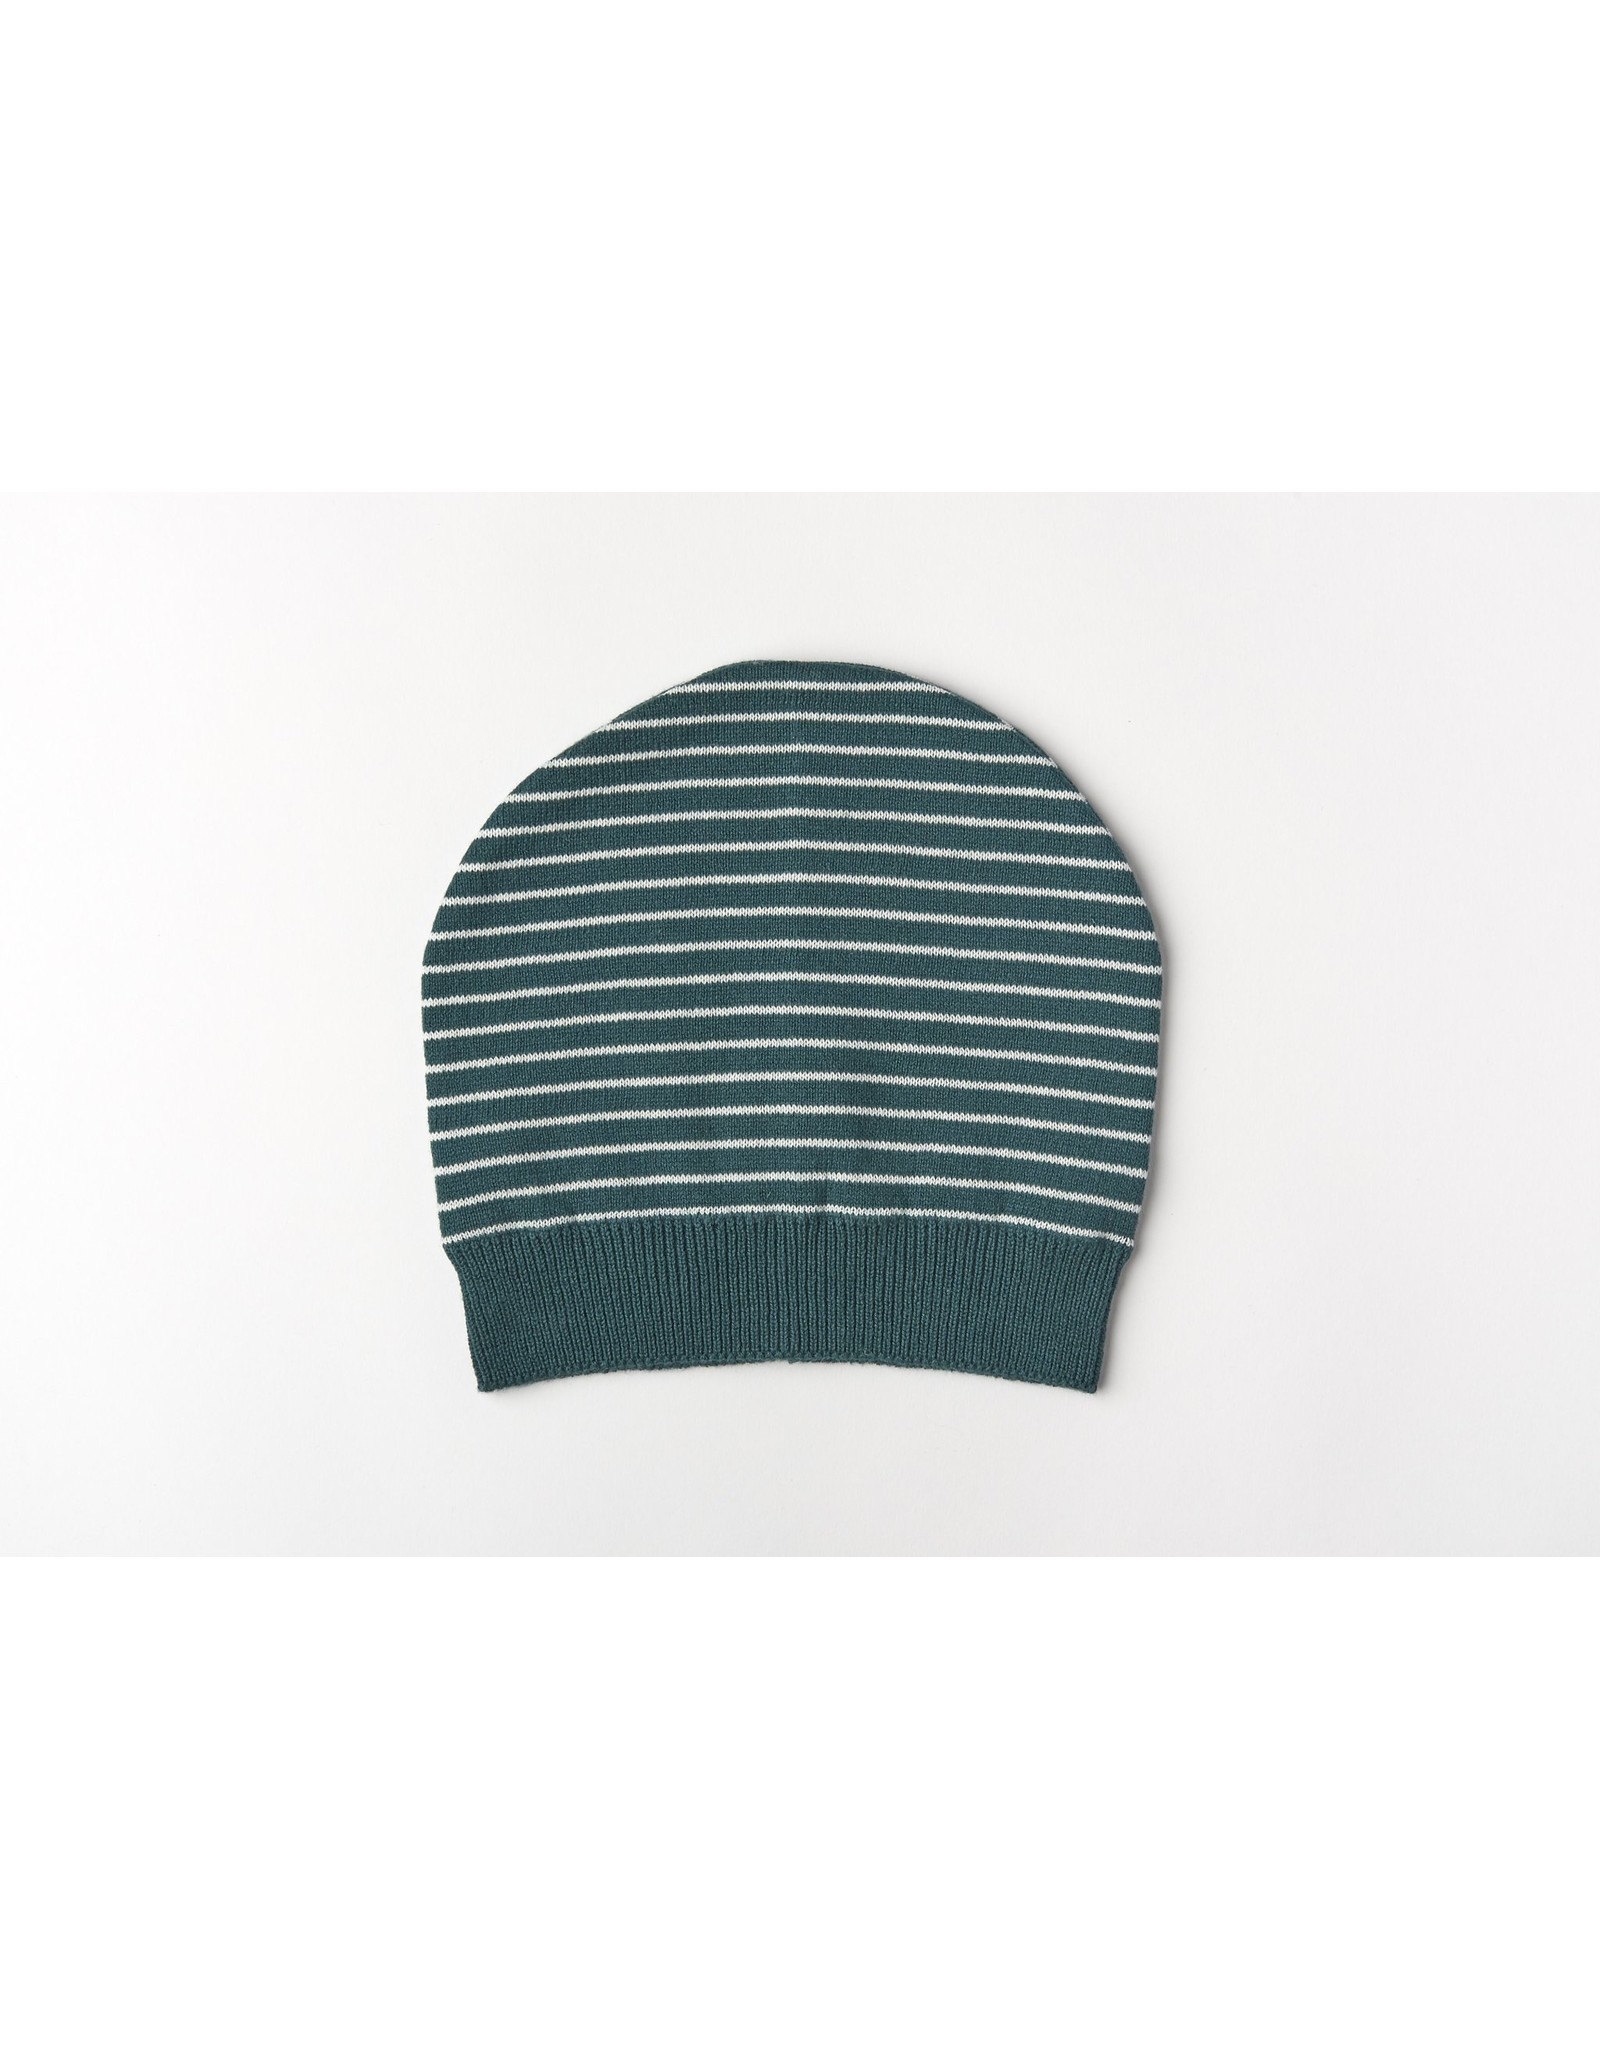 Mundo Melocoton Hat Organic Knitwear Stripes La Linea Teal